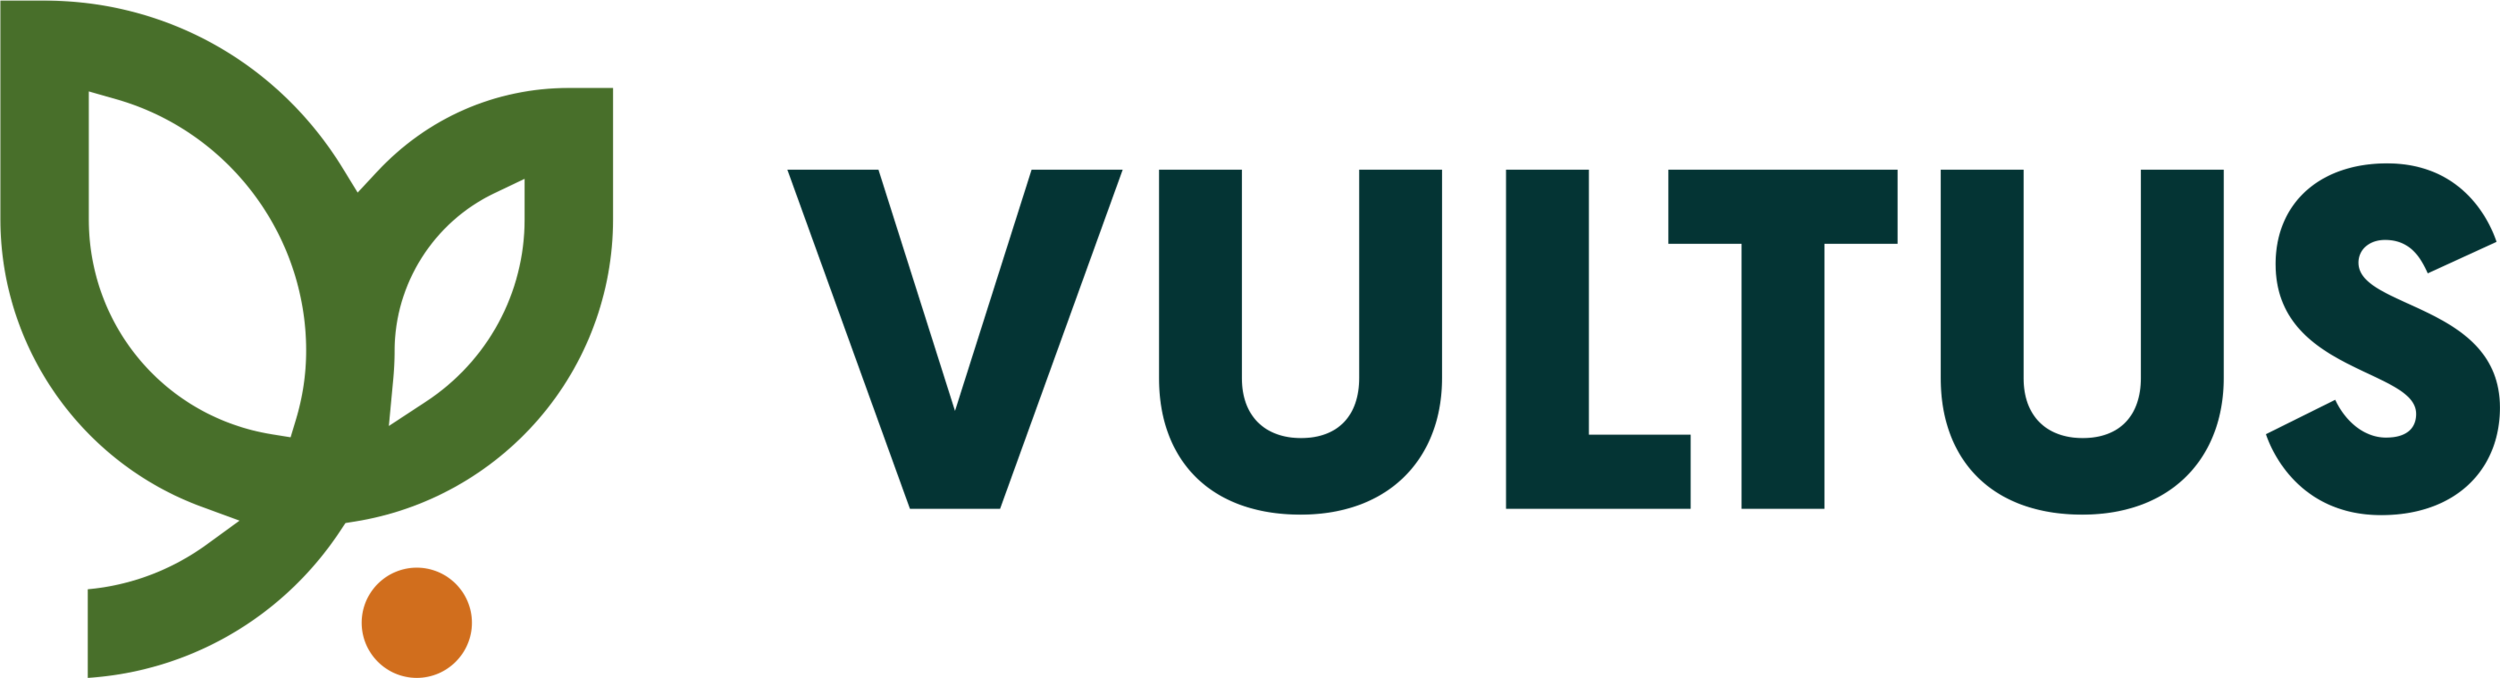 Vultus logotyp